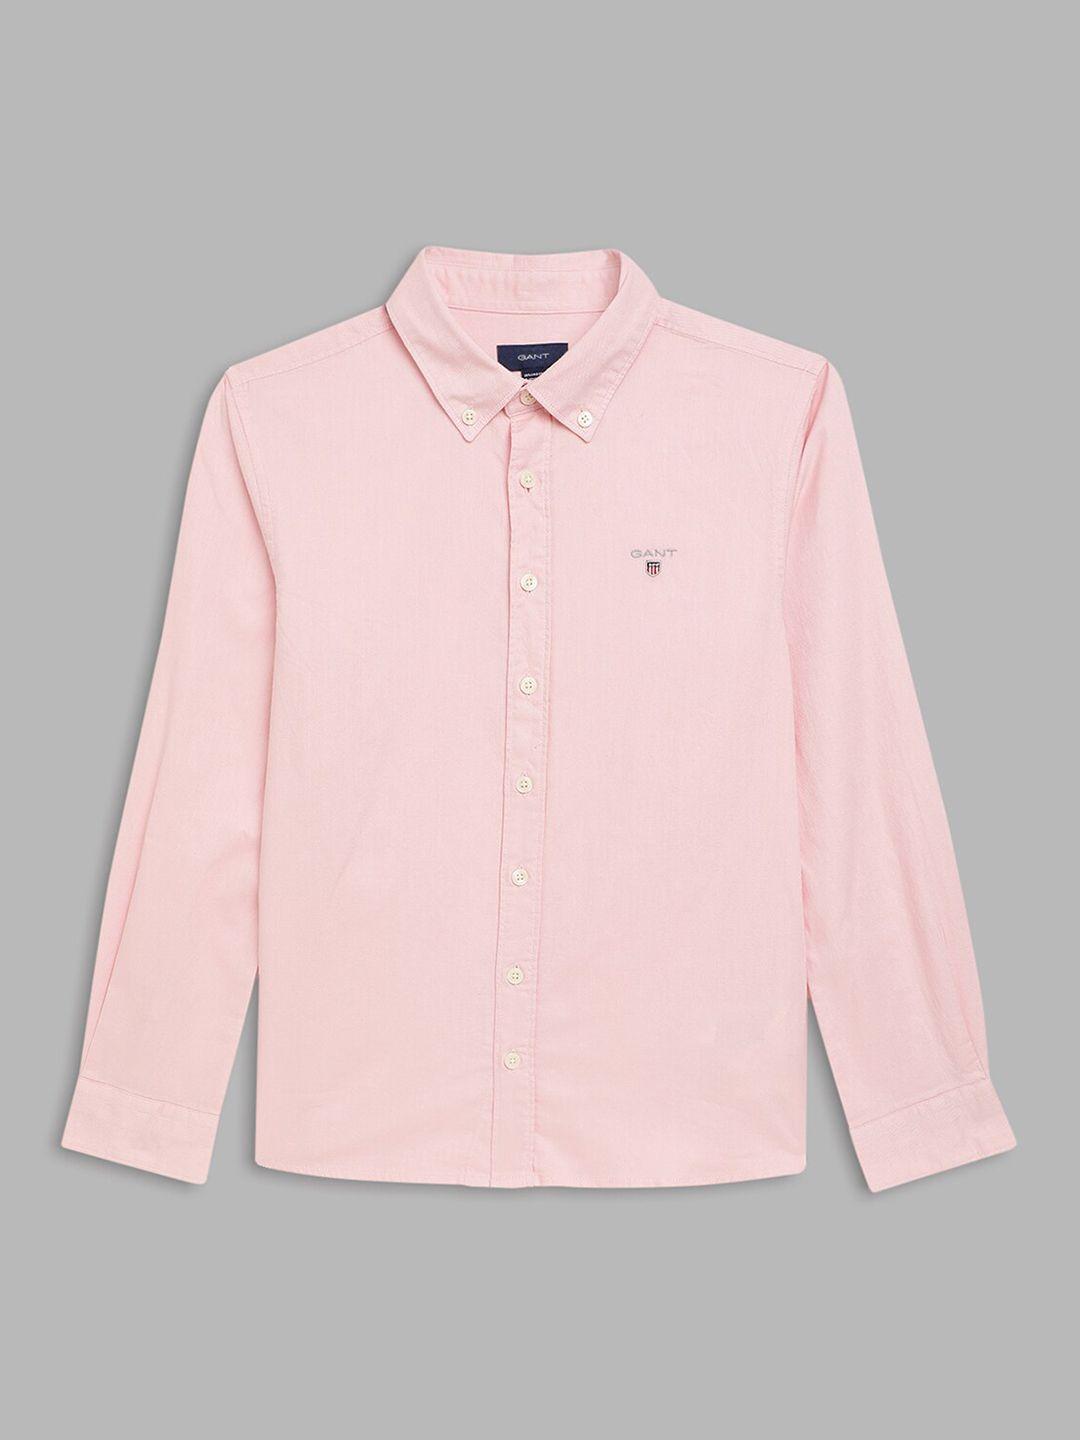 gant boys pink standard casual shirt